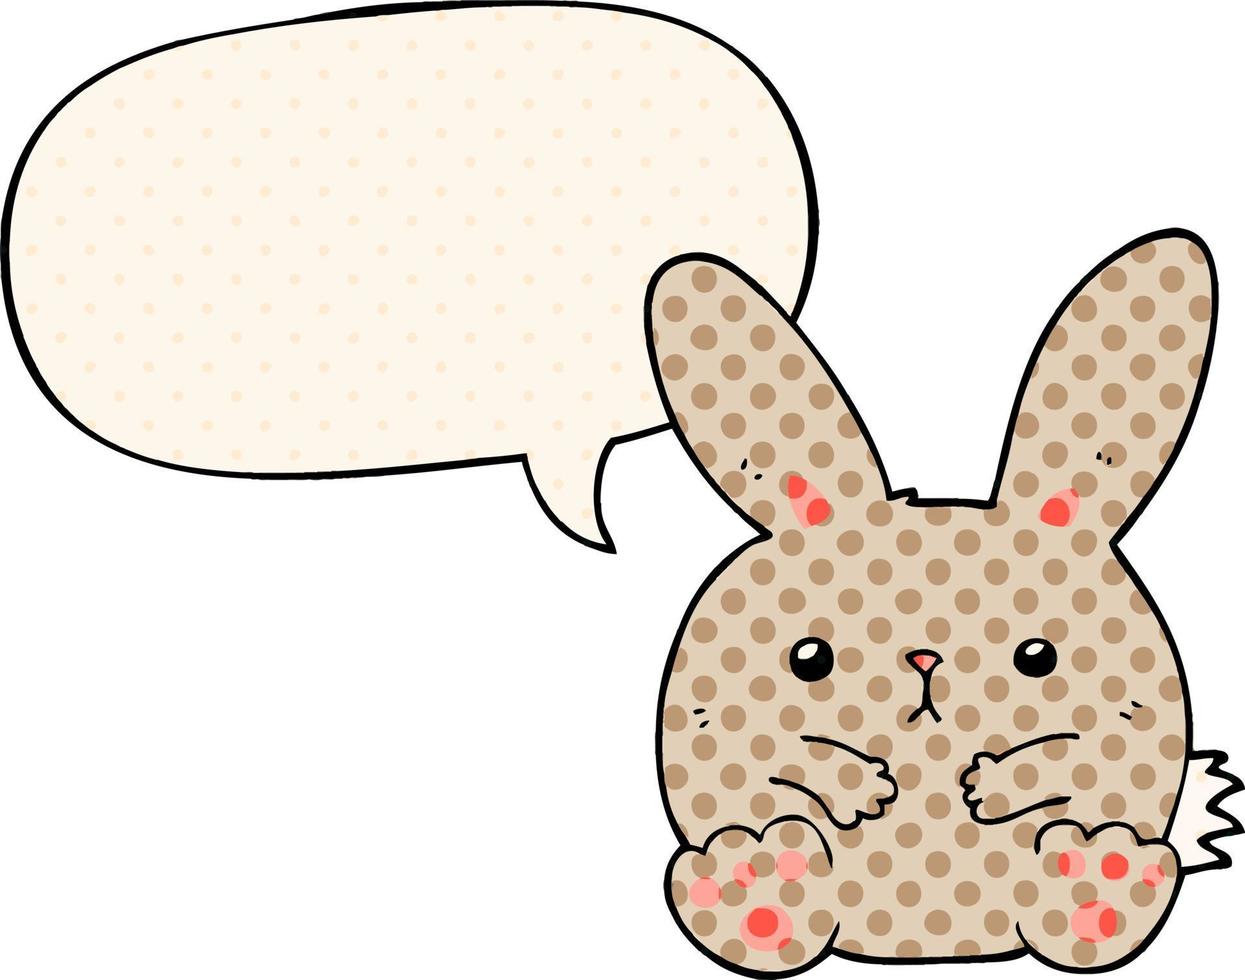 cartoon rabbit and speech bubble in comic book style vector